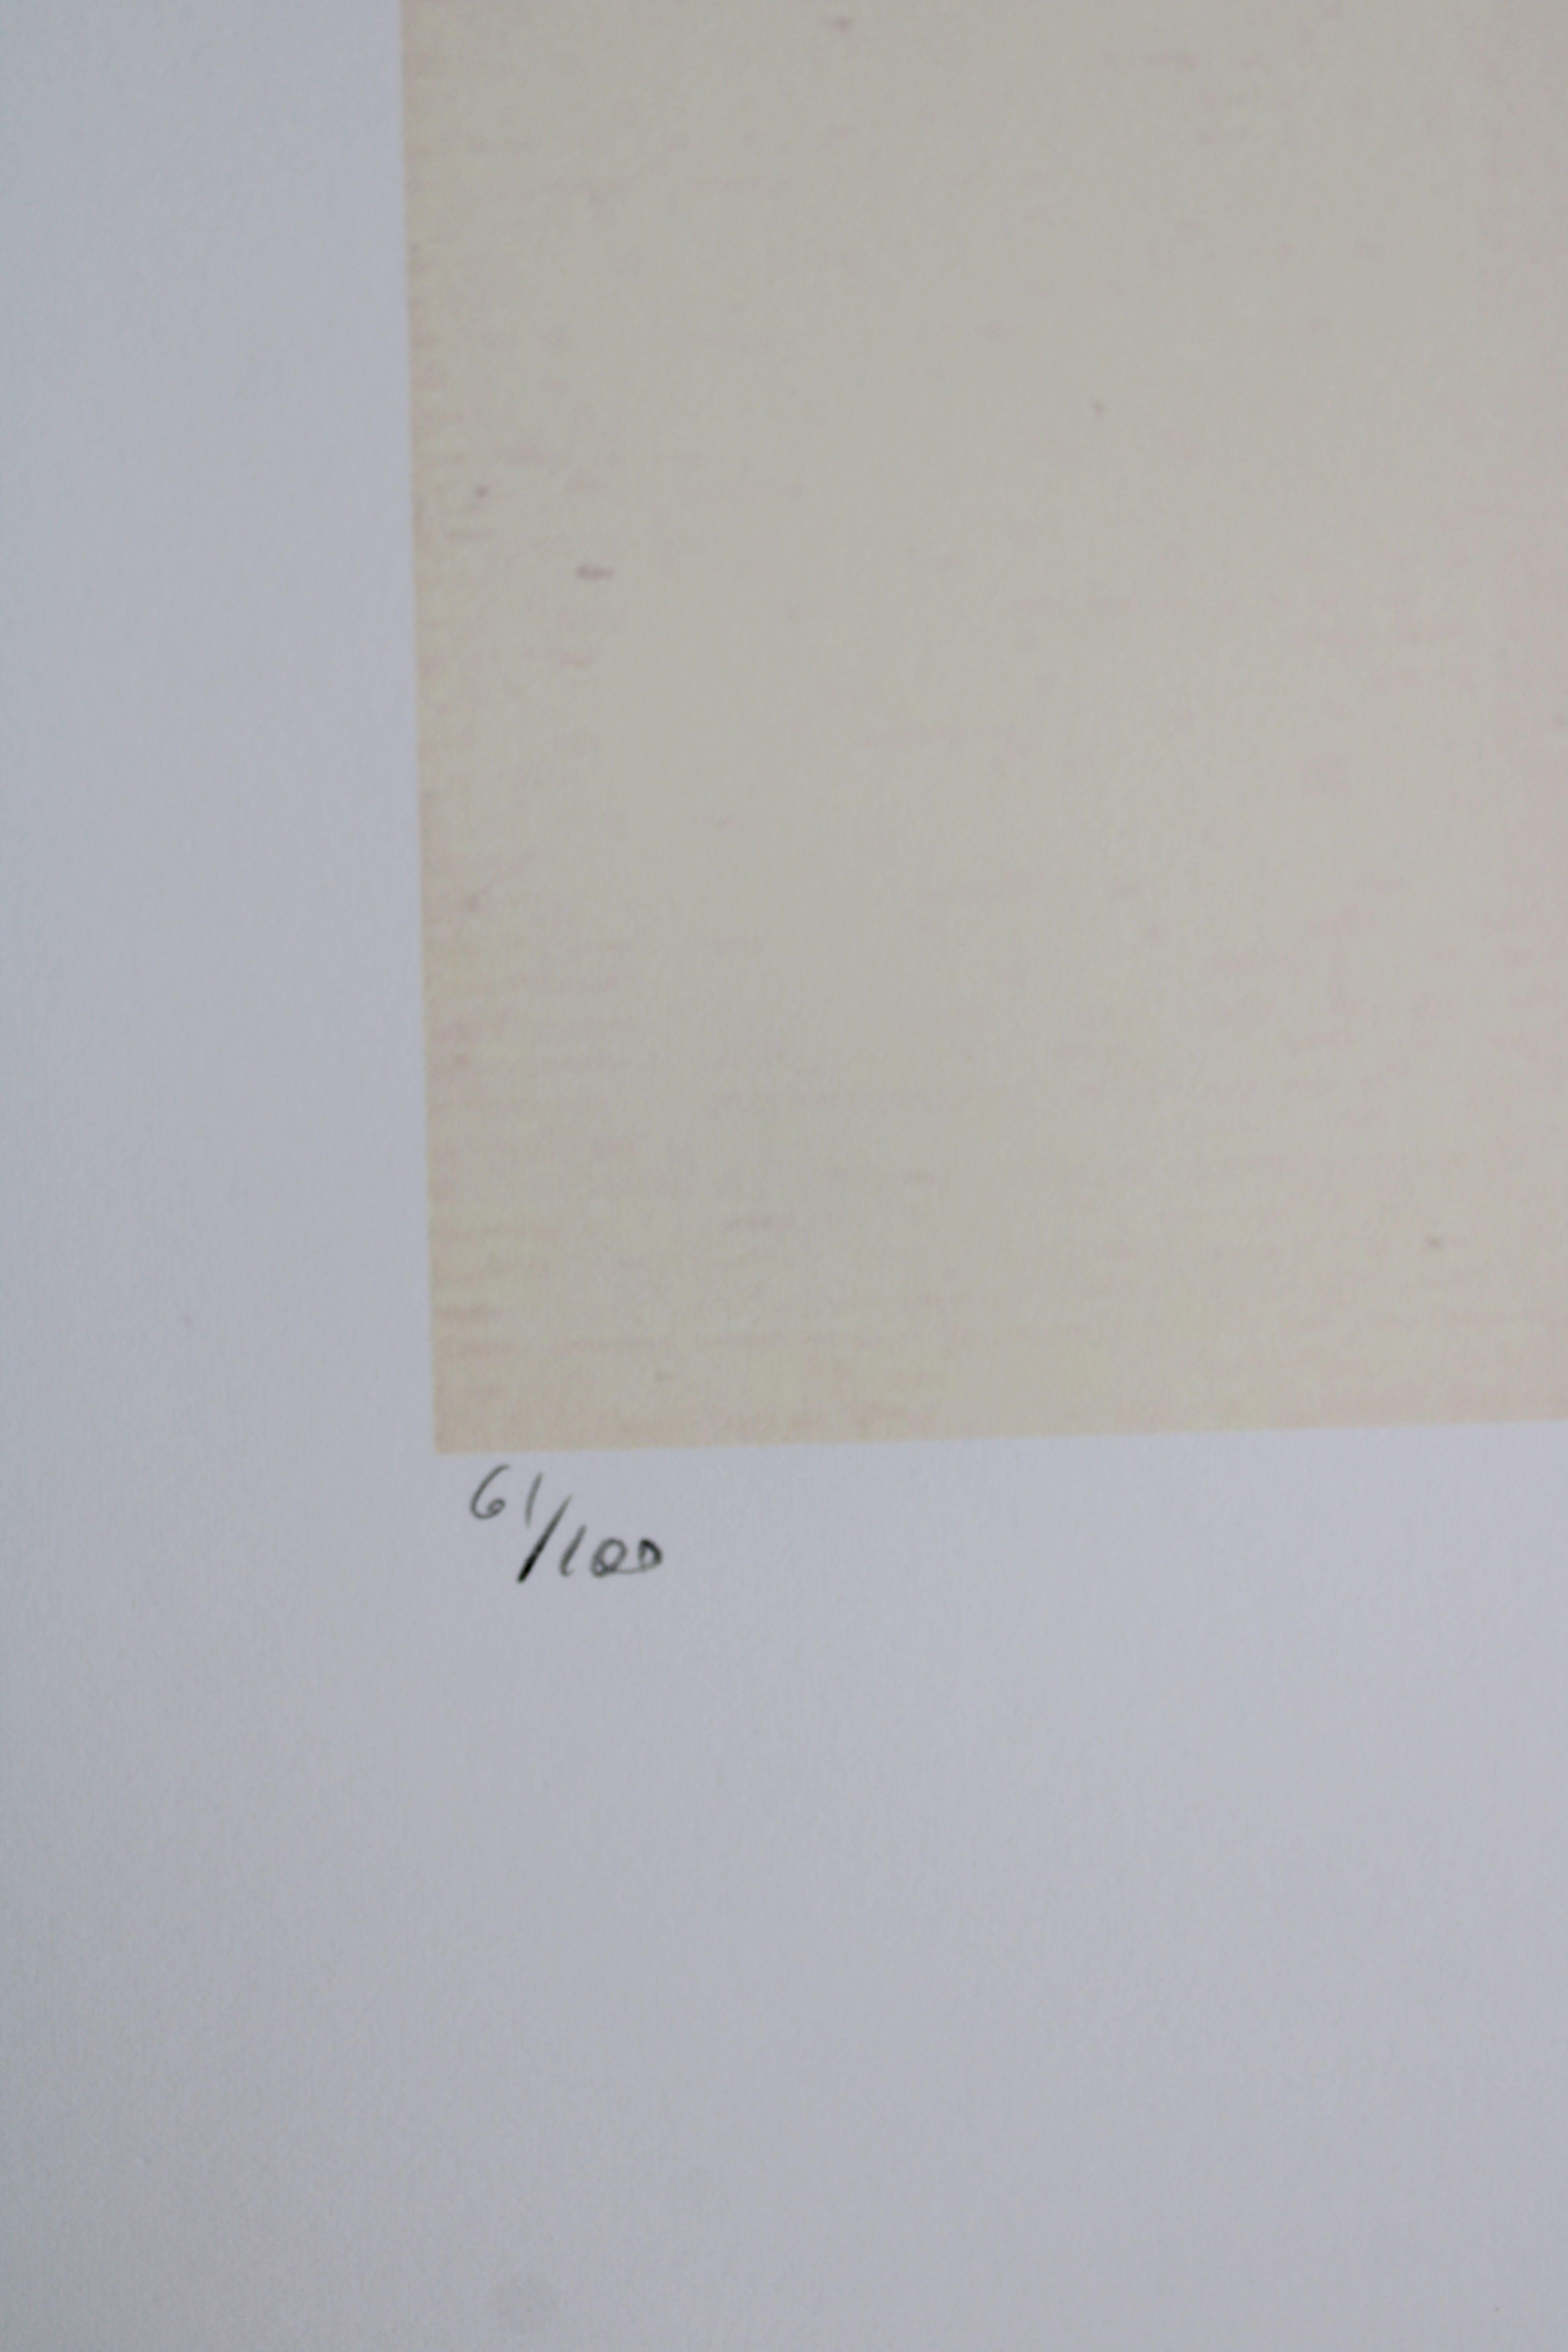 Lunar cat  61/100. Lithography, offset printing, imprint size 44x28, 5 cm 1